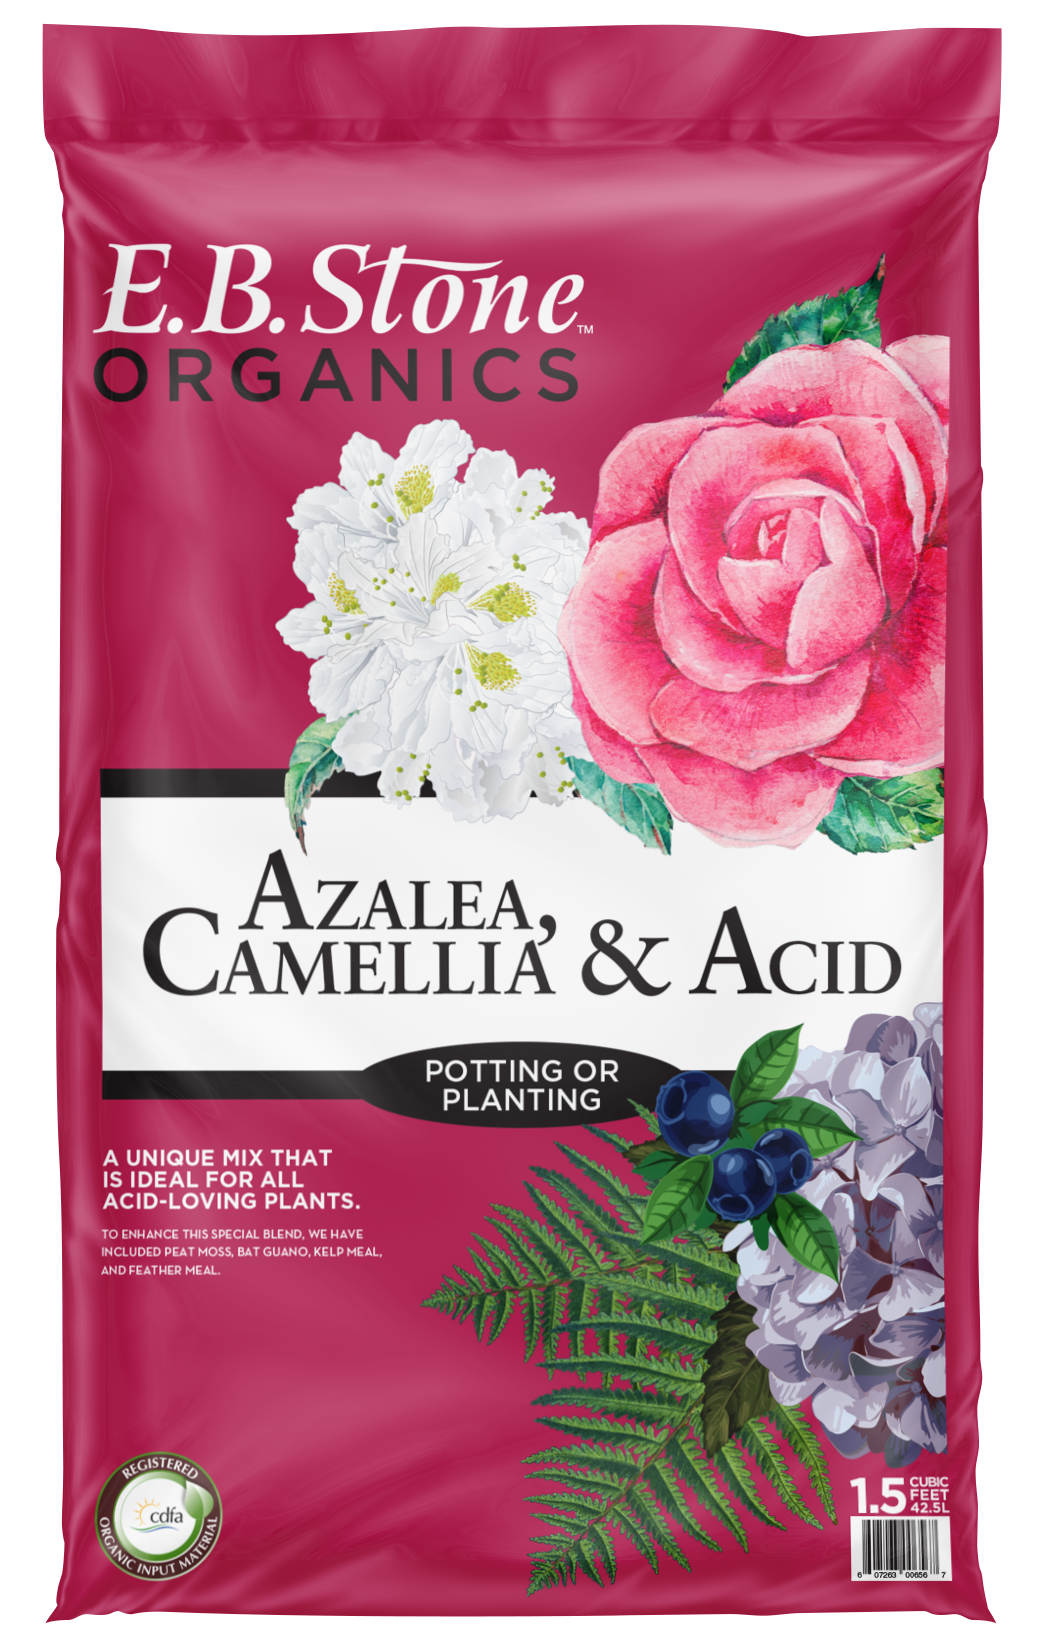 E.B. Stone Organics Azalea, Camellia and Acid Planting Mix